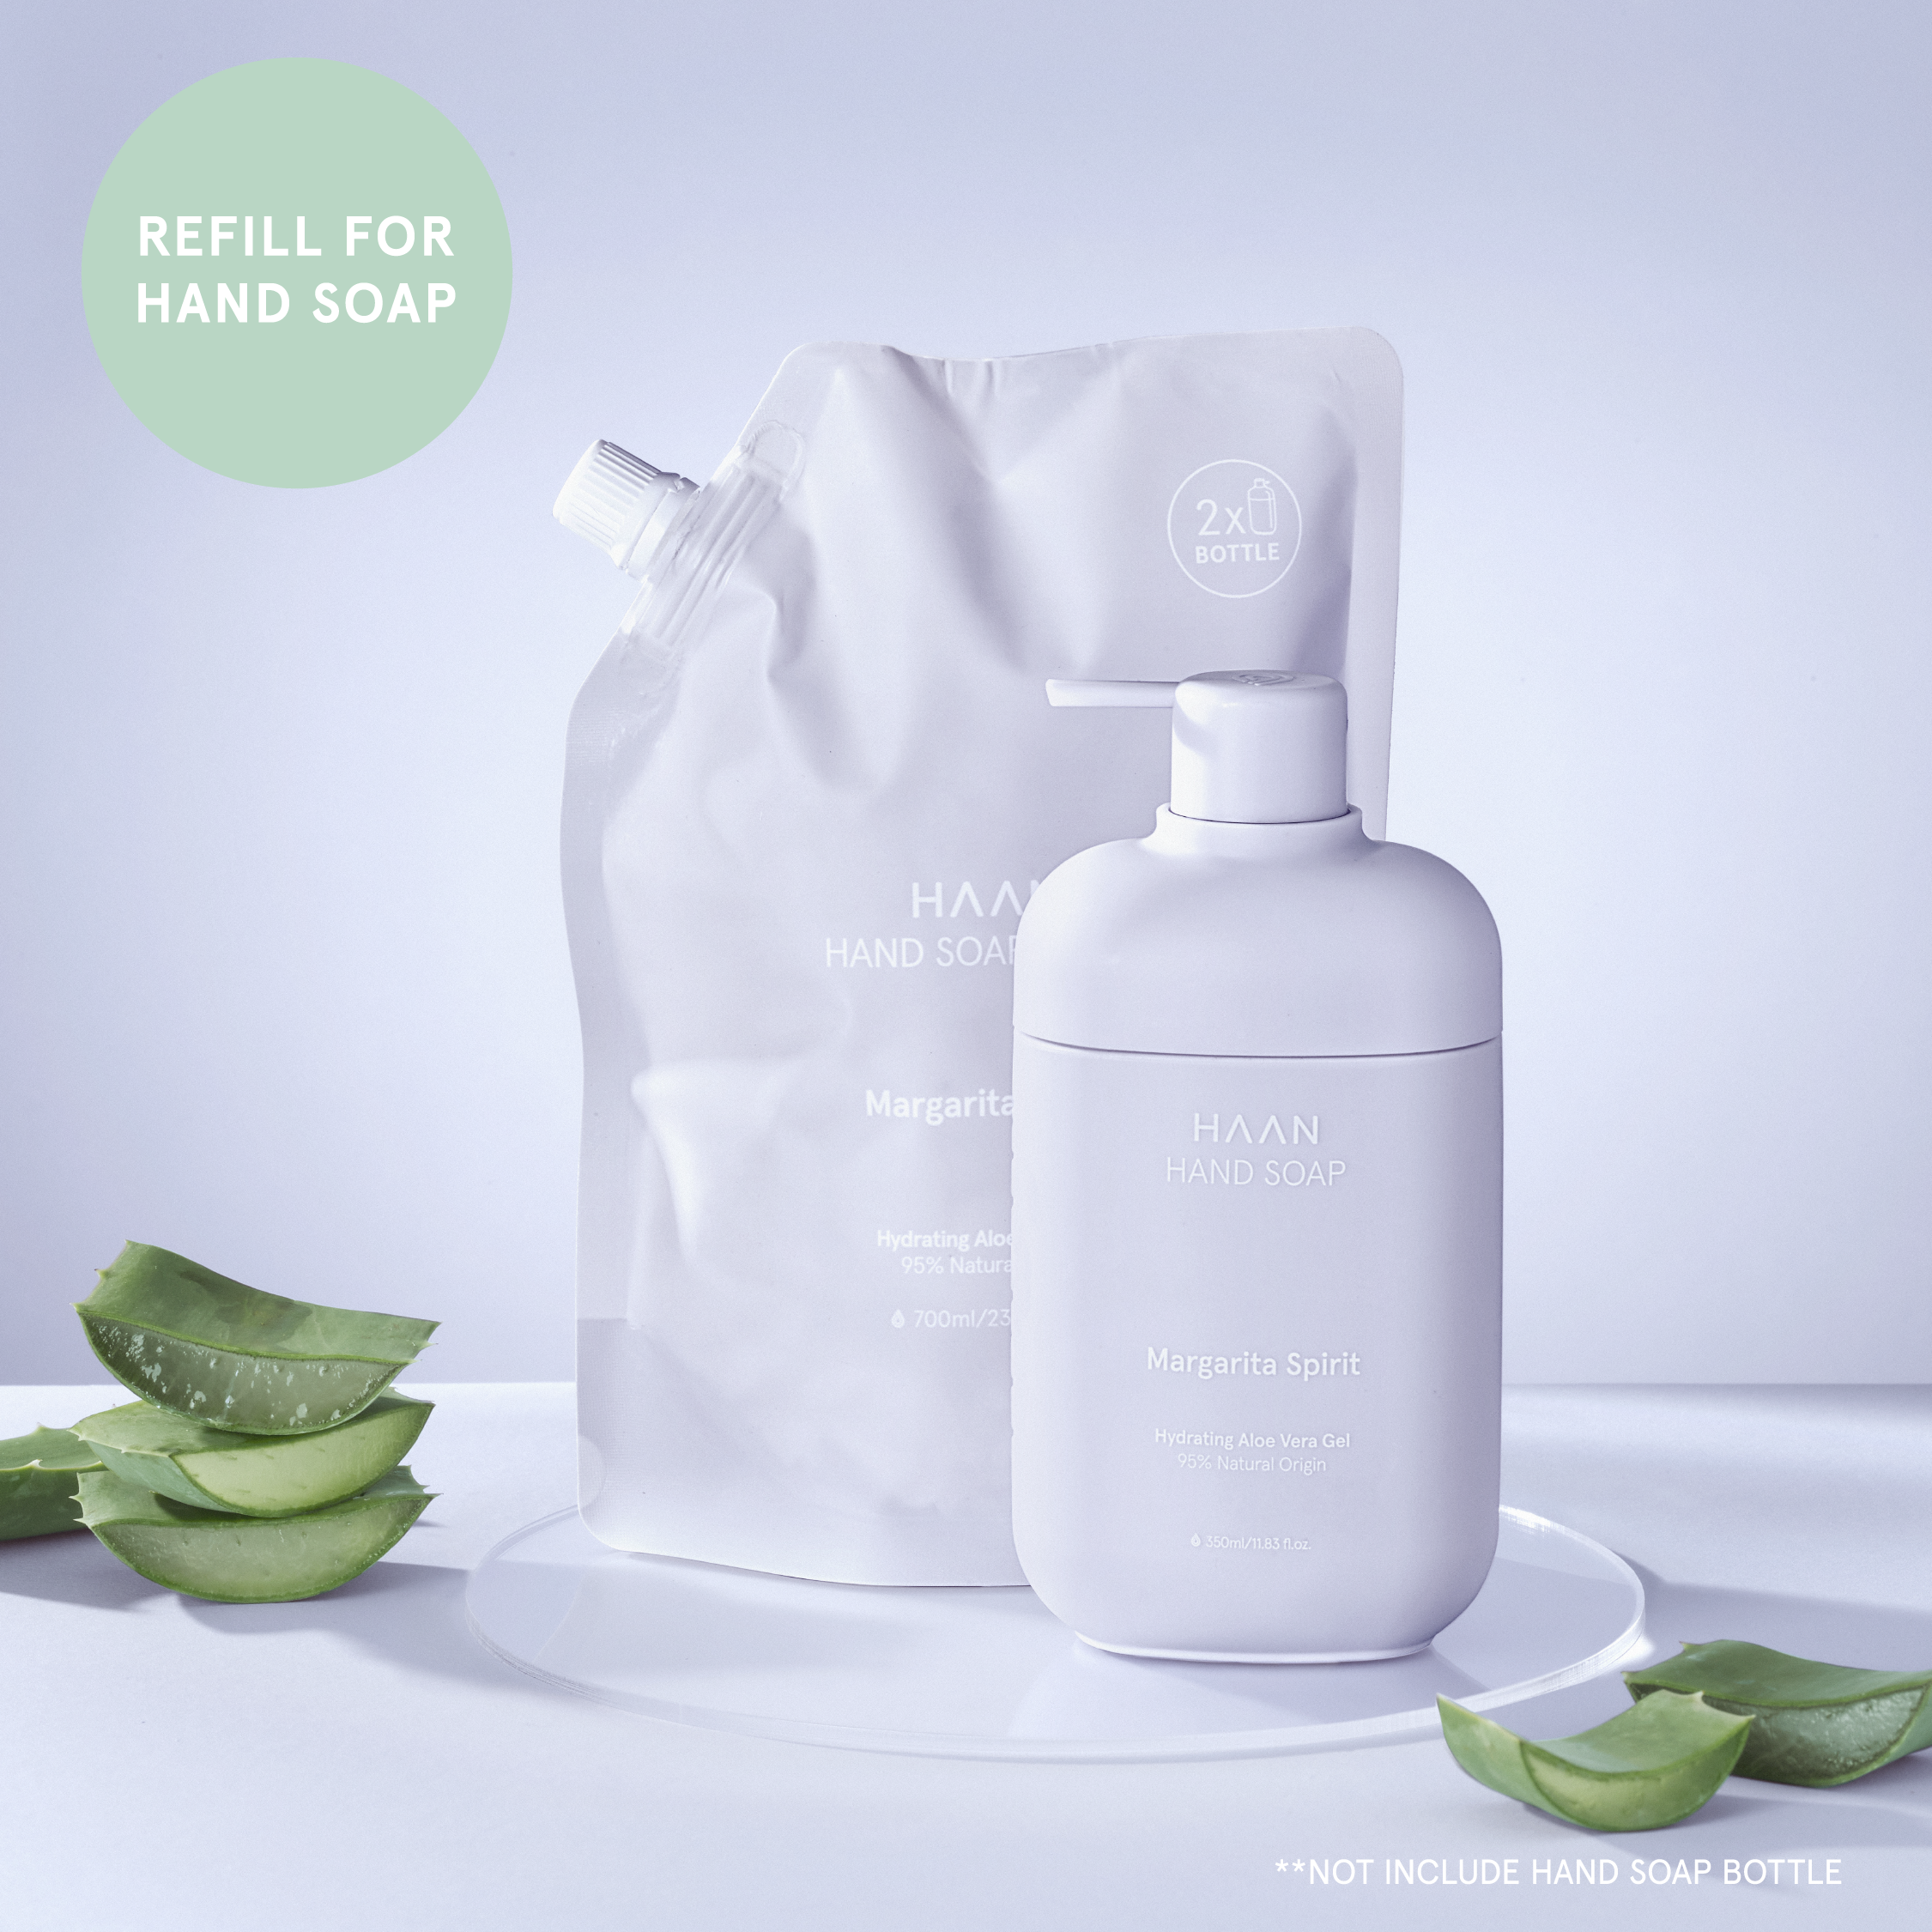 HAAN Hand Soap - Margarita Spirit 700ml (Refill)